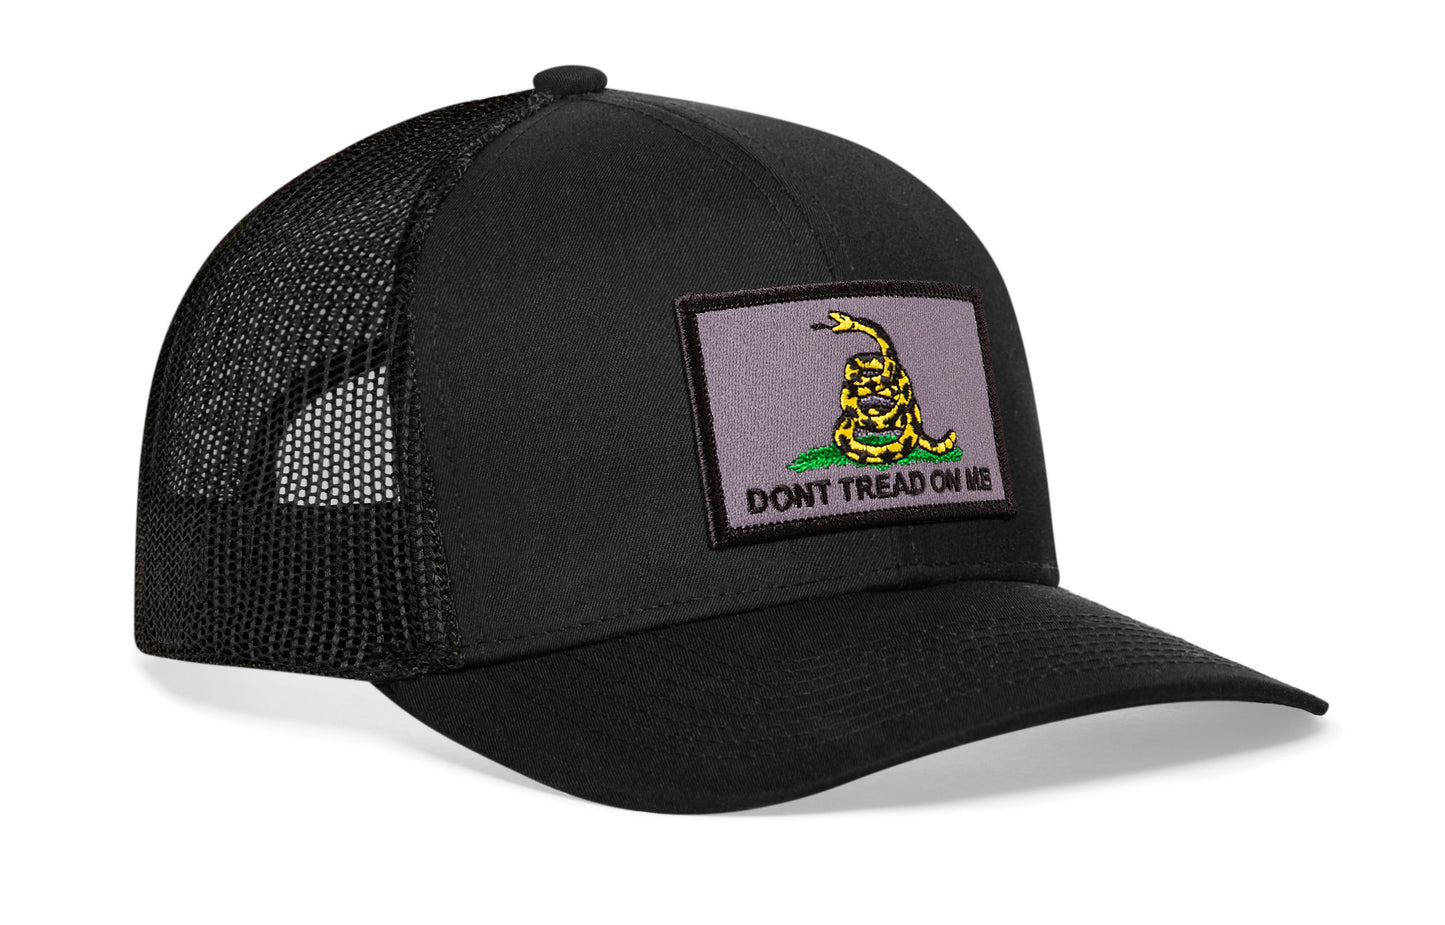 Dont Tread on Me Trucker Hat  |  Black Gadsden Flag Snapback